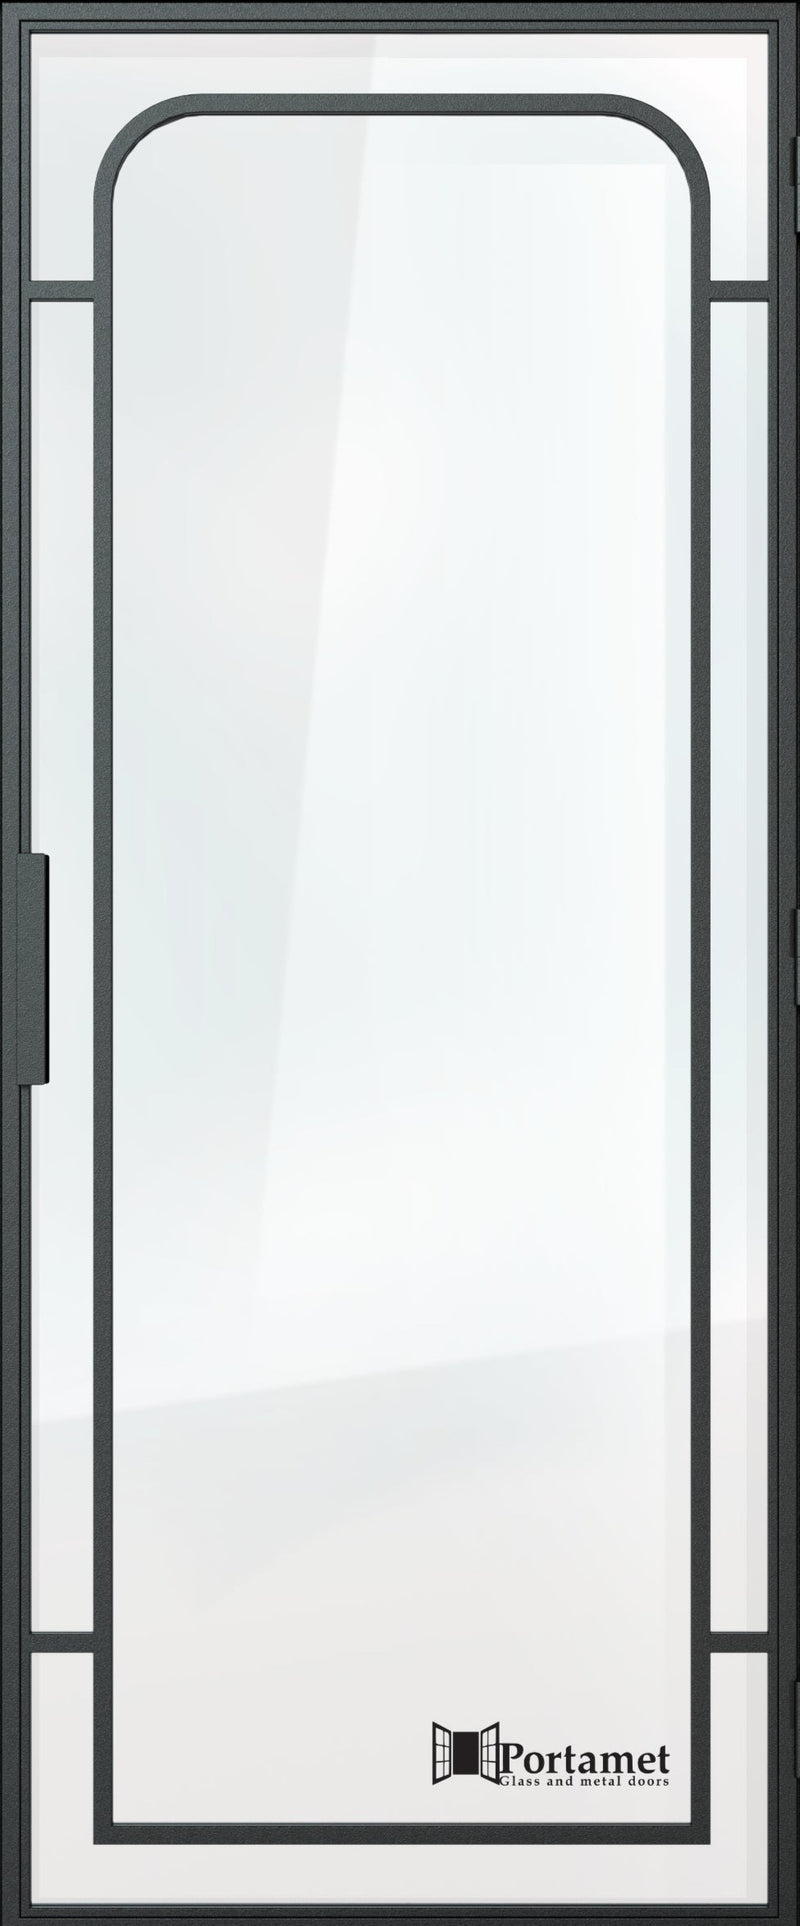 Portamet by Sfarzo - Faro Classic Single Glazed Steel Hinged Door with Frame